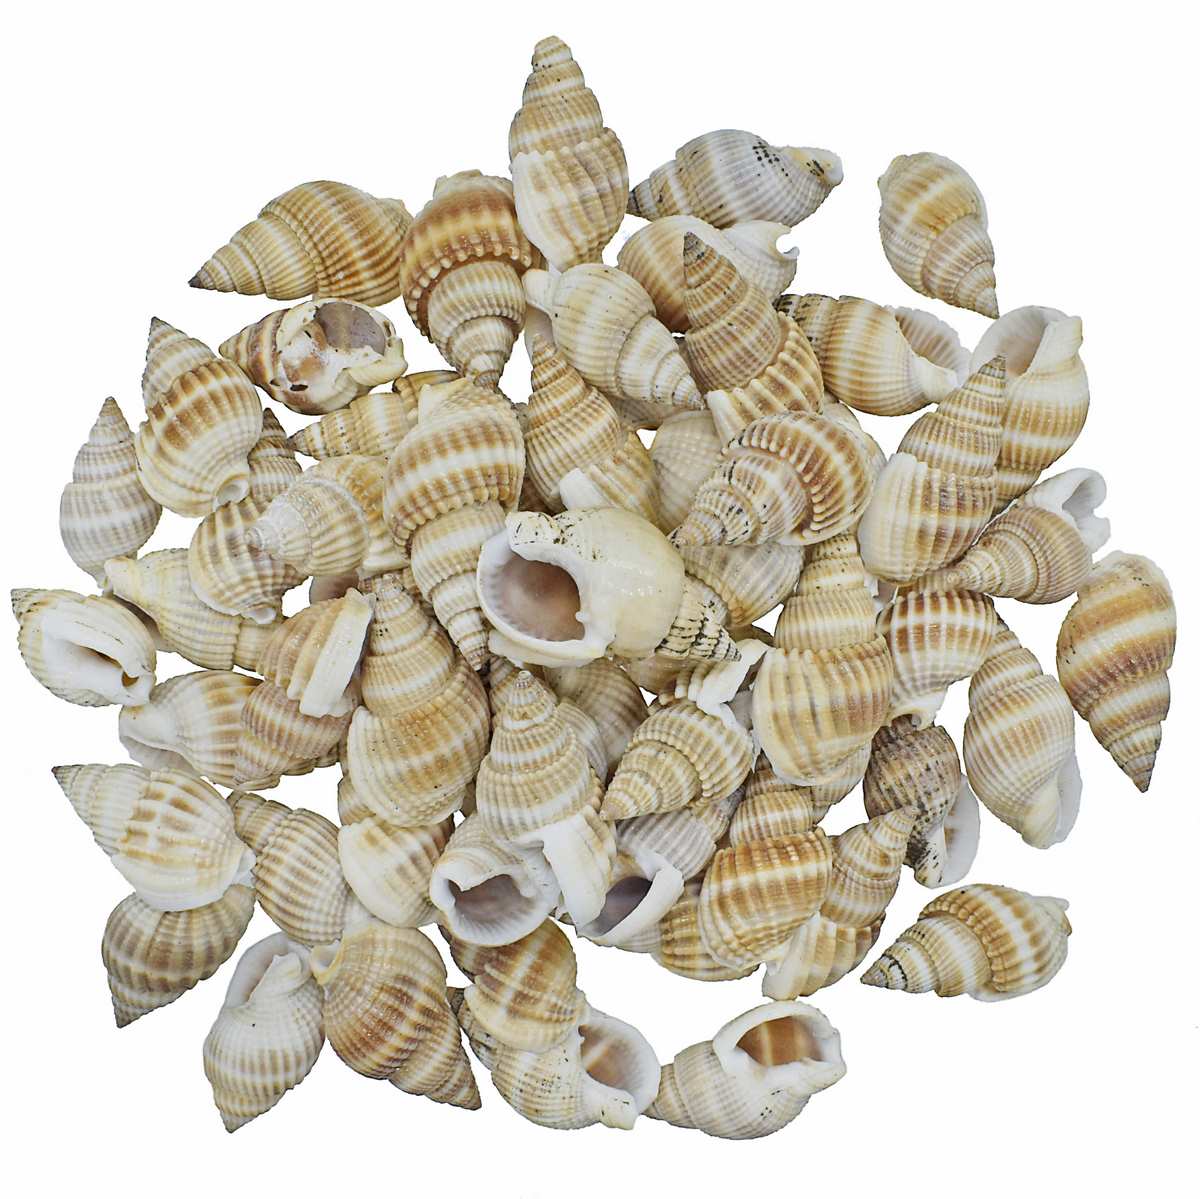 jags-mumbai Resin Shells Color Vali Kopparta 100gm